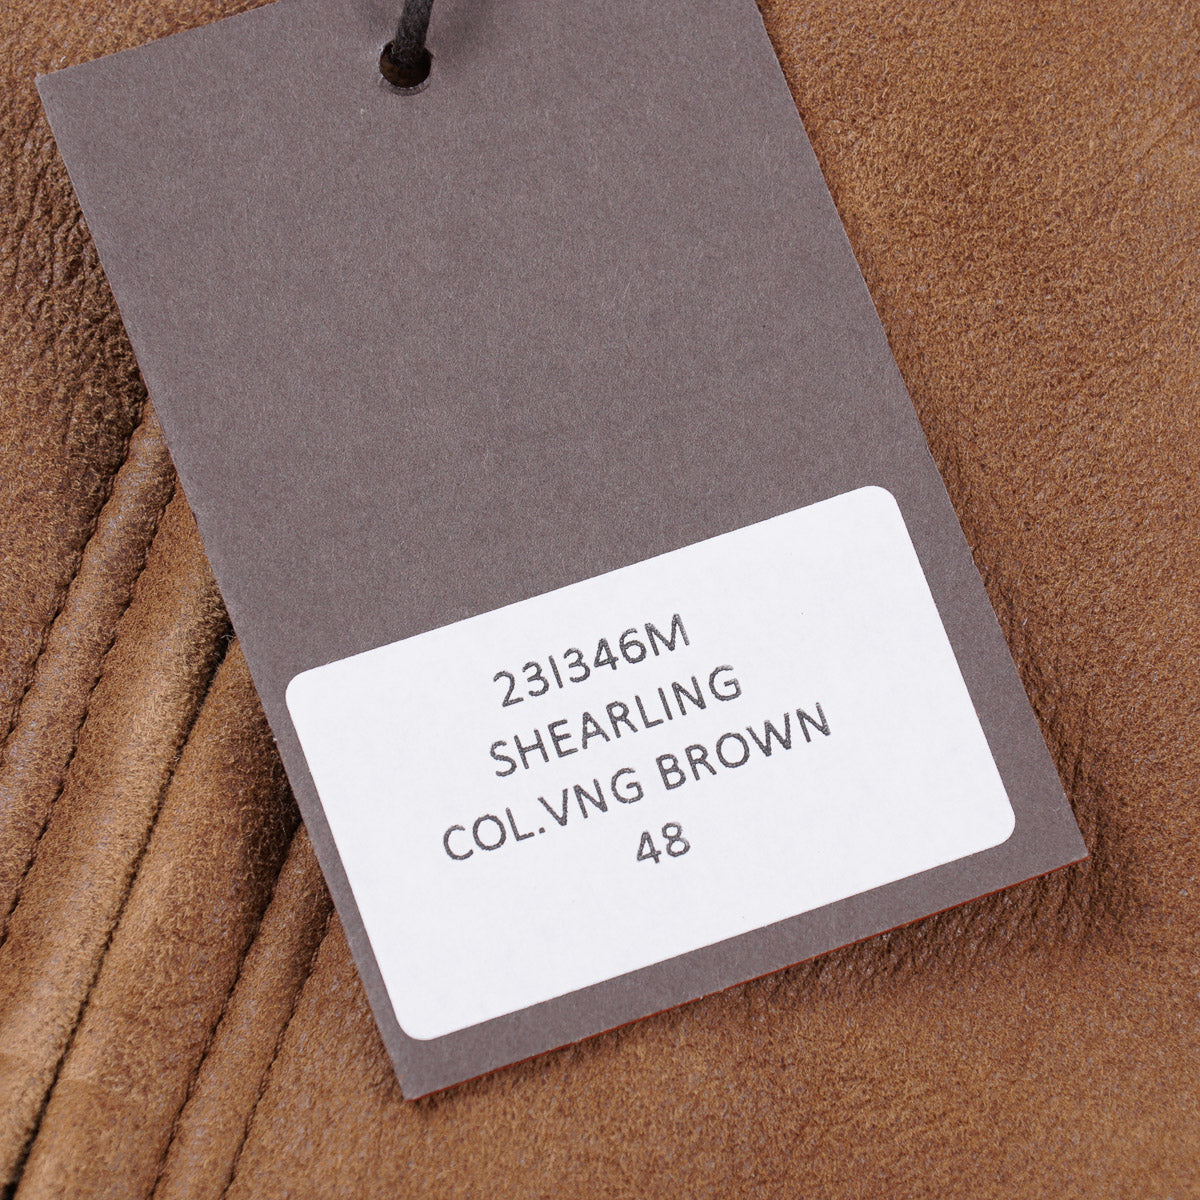 Rifugio Shearling Leather Aviator Jacket - Top Shelf Apparel